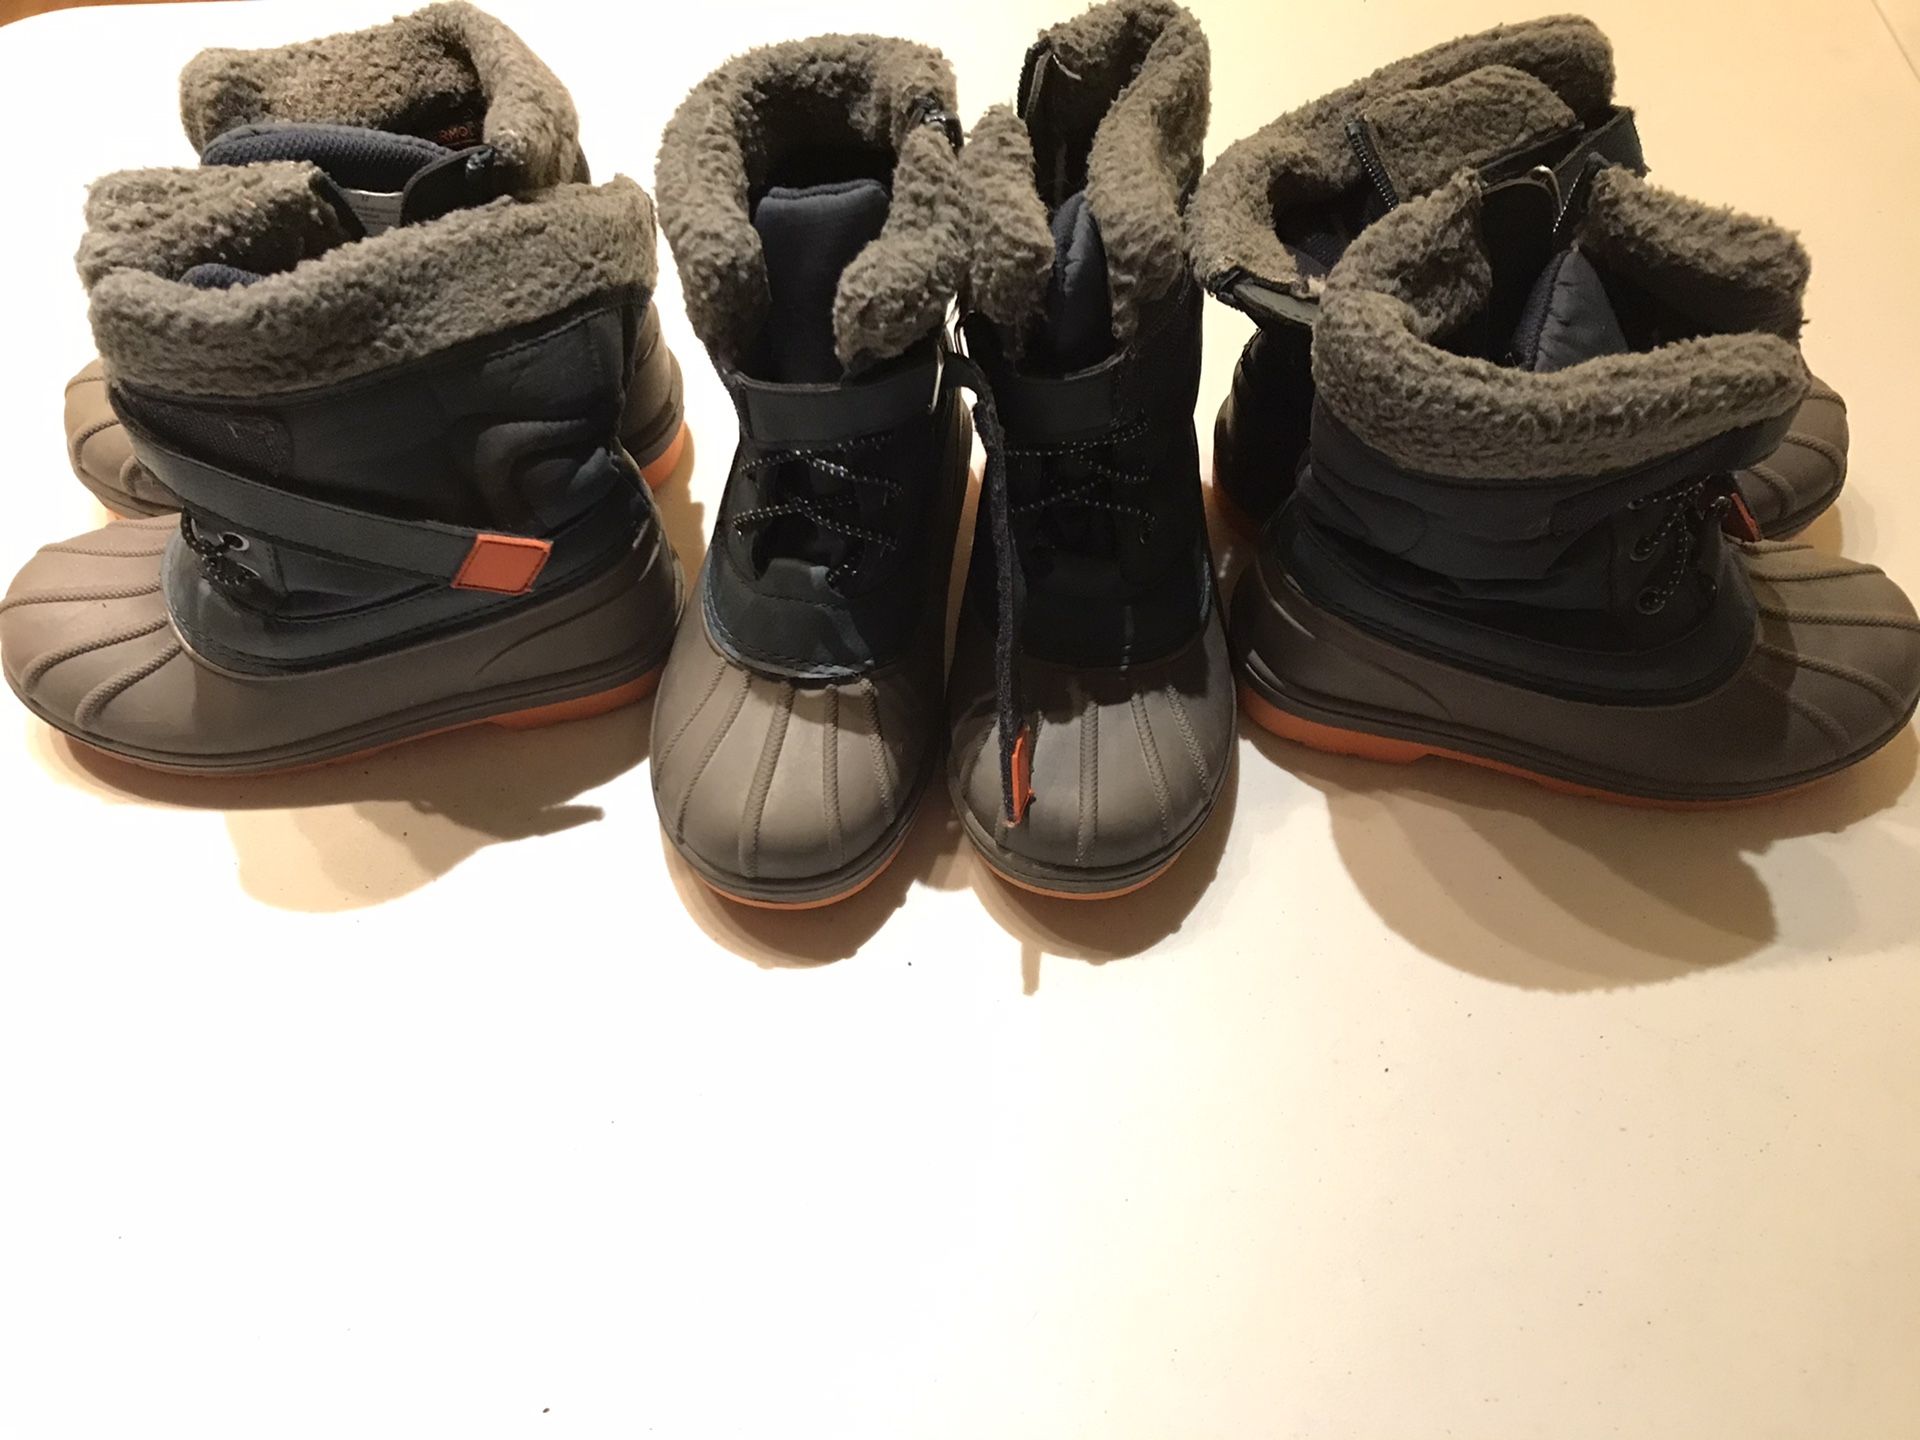 Triplet size 12 kids snow boots